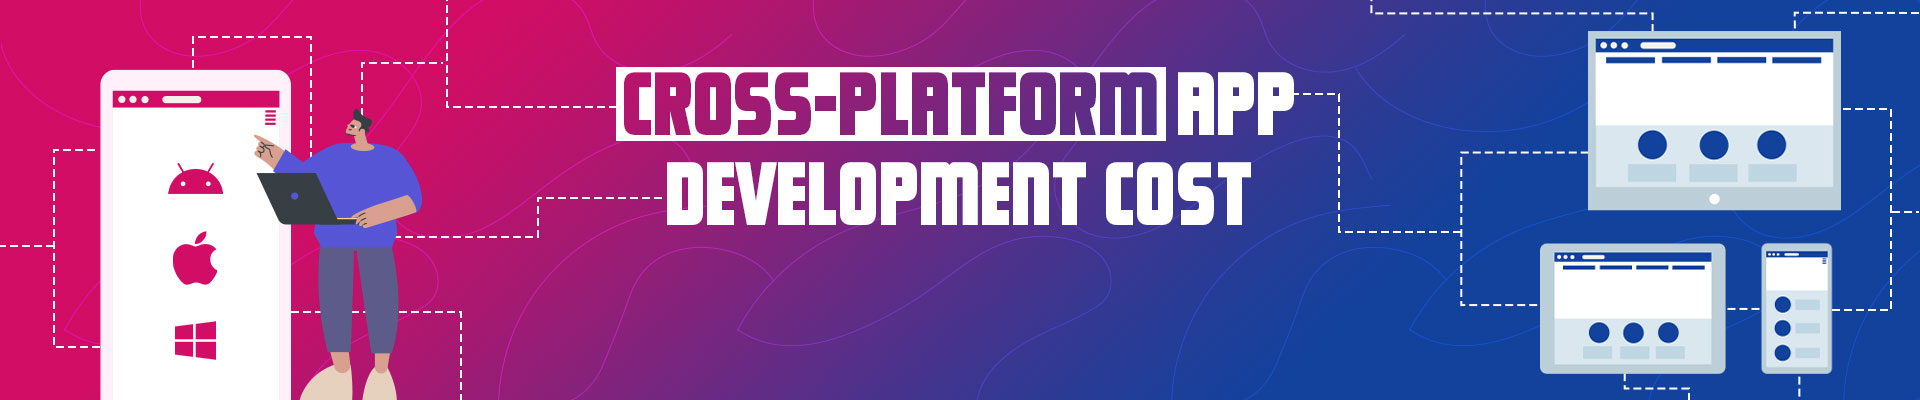 Cross platform app development cost